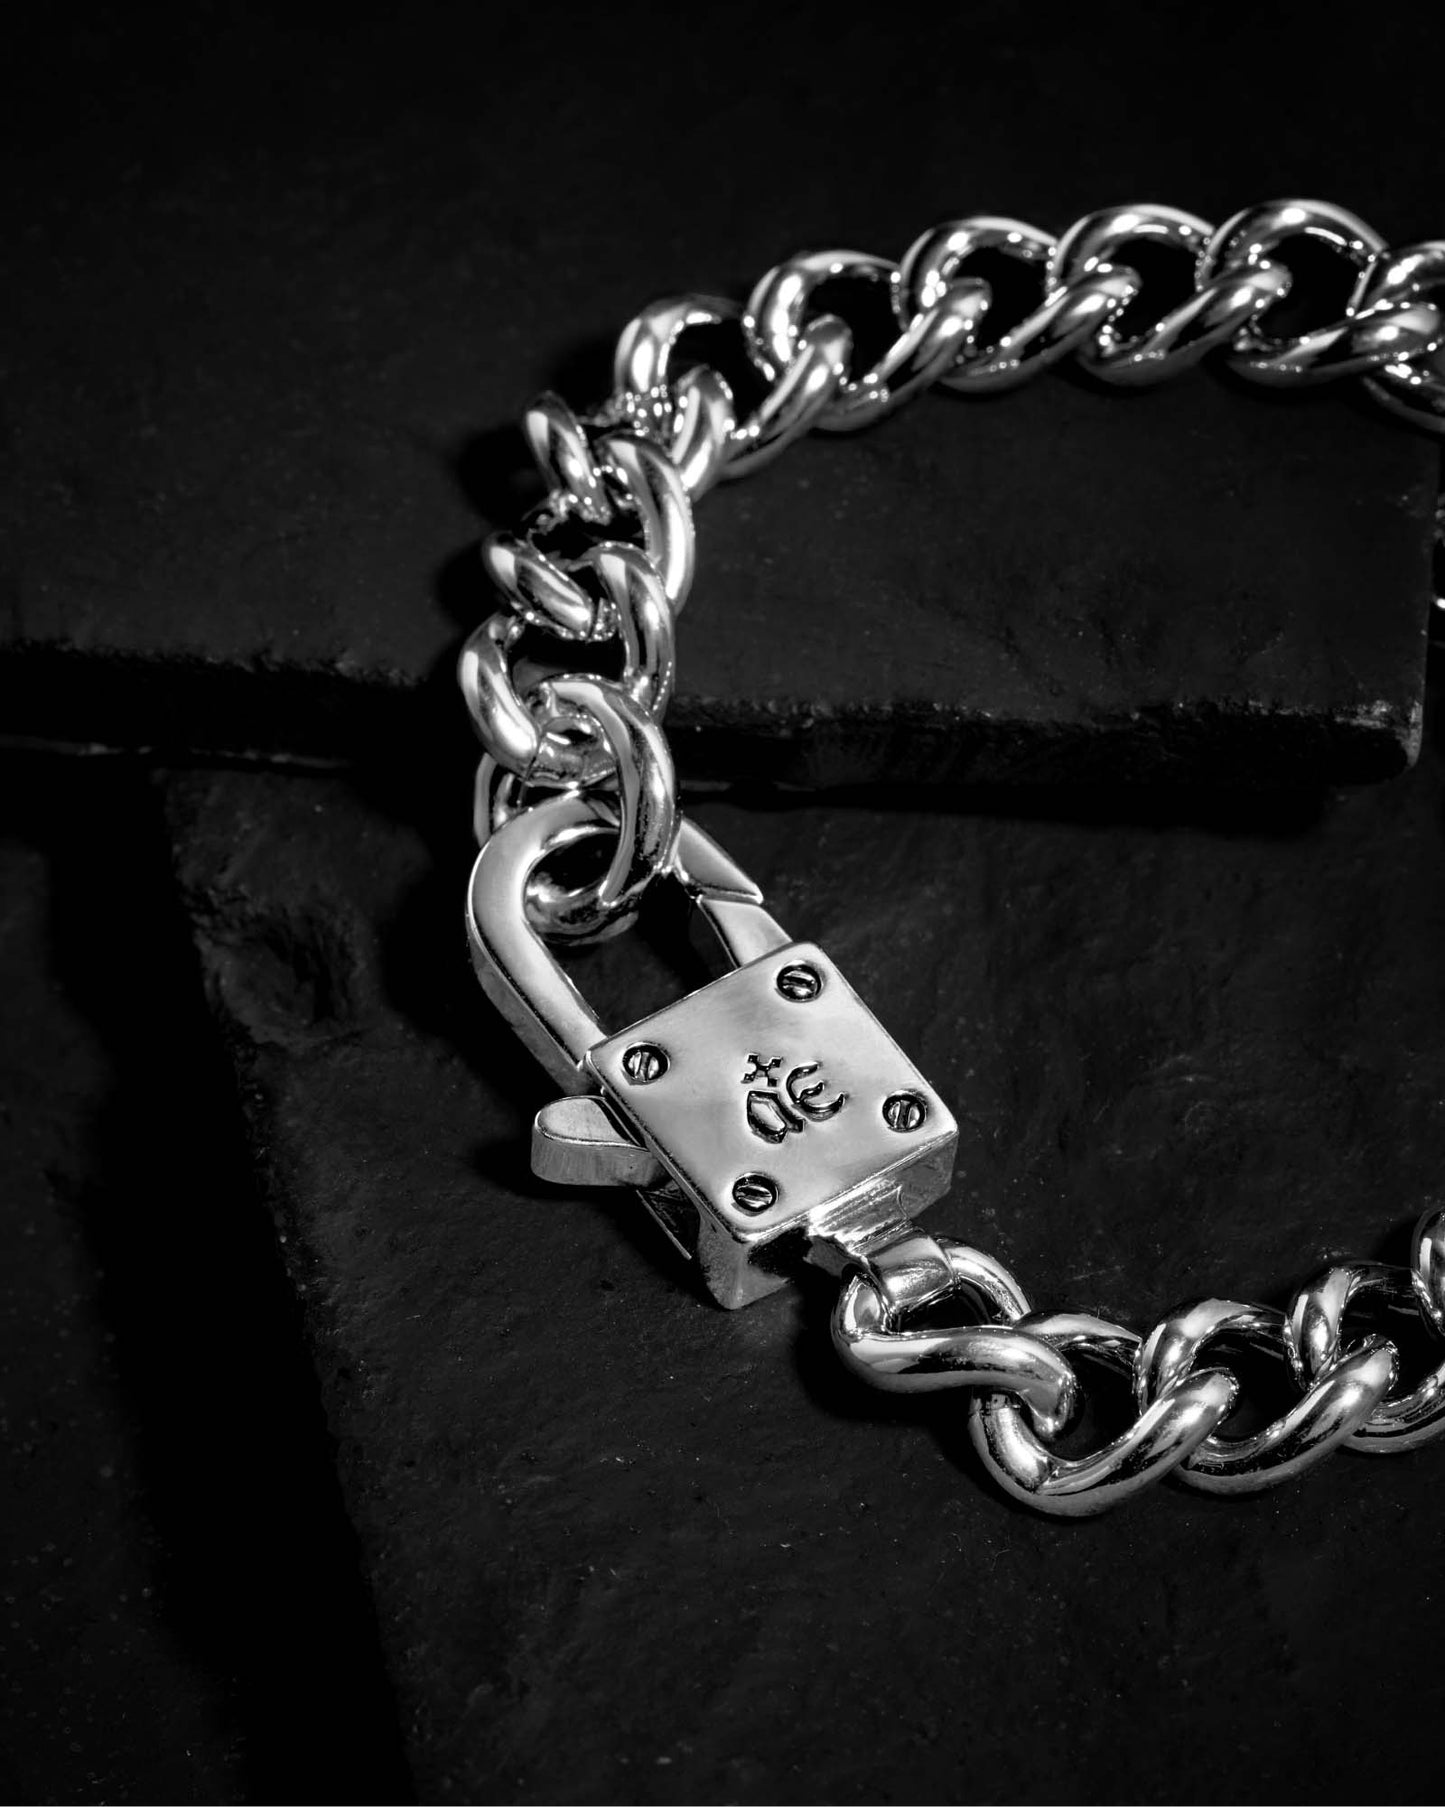 Sync Chain Bracelet